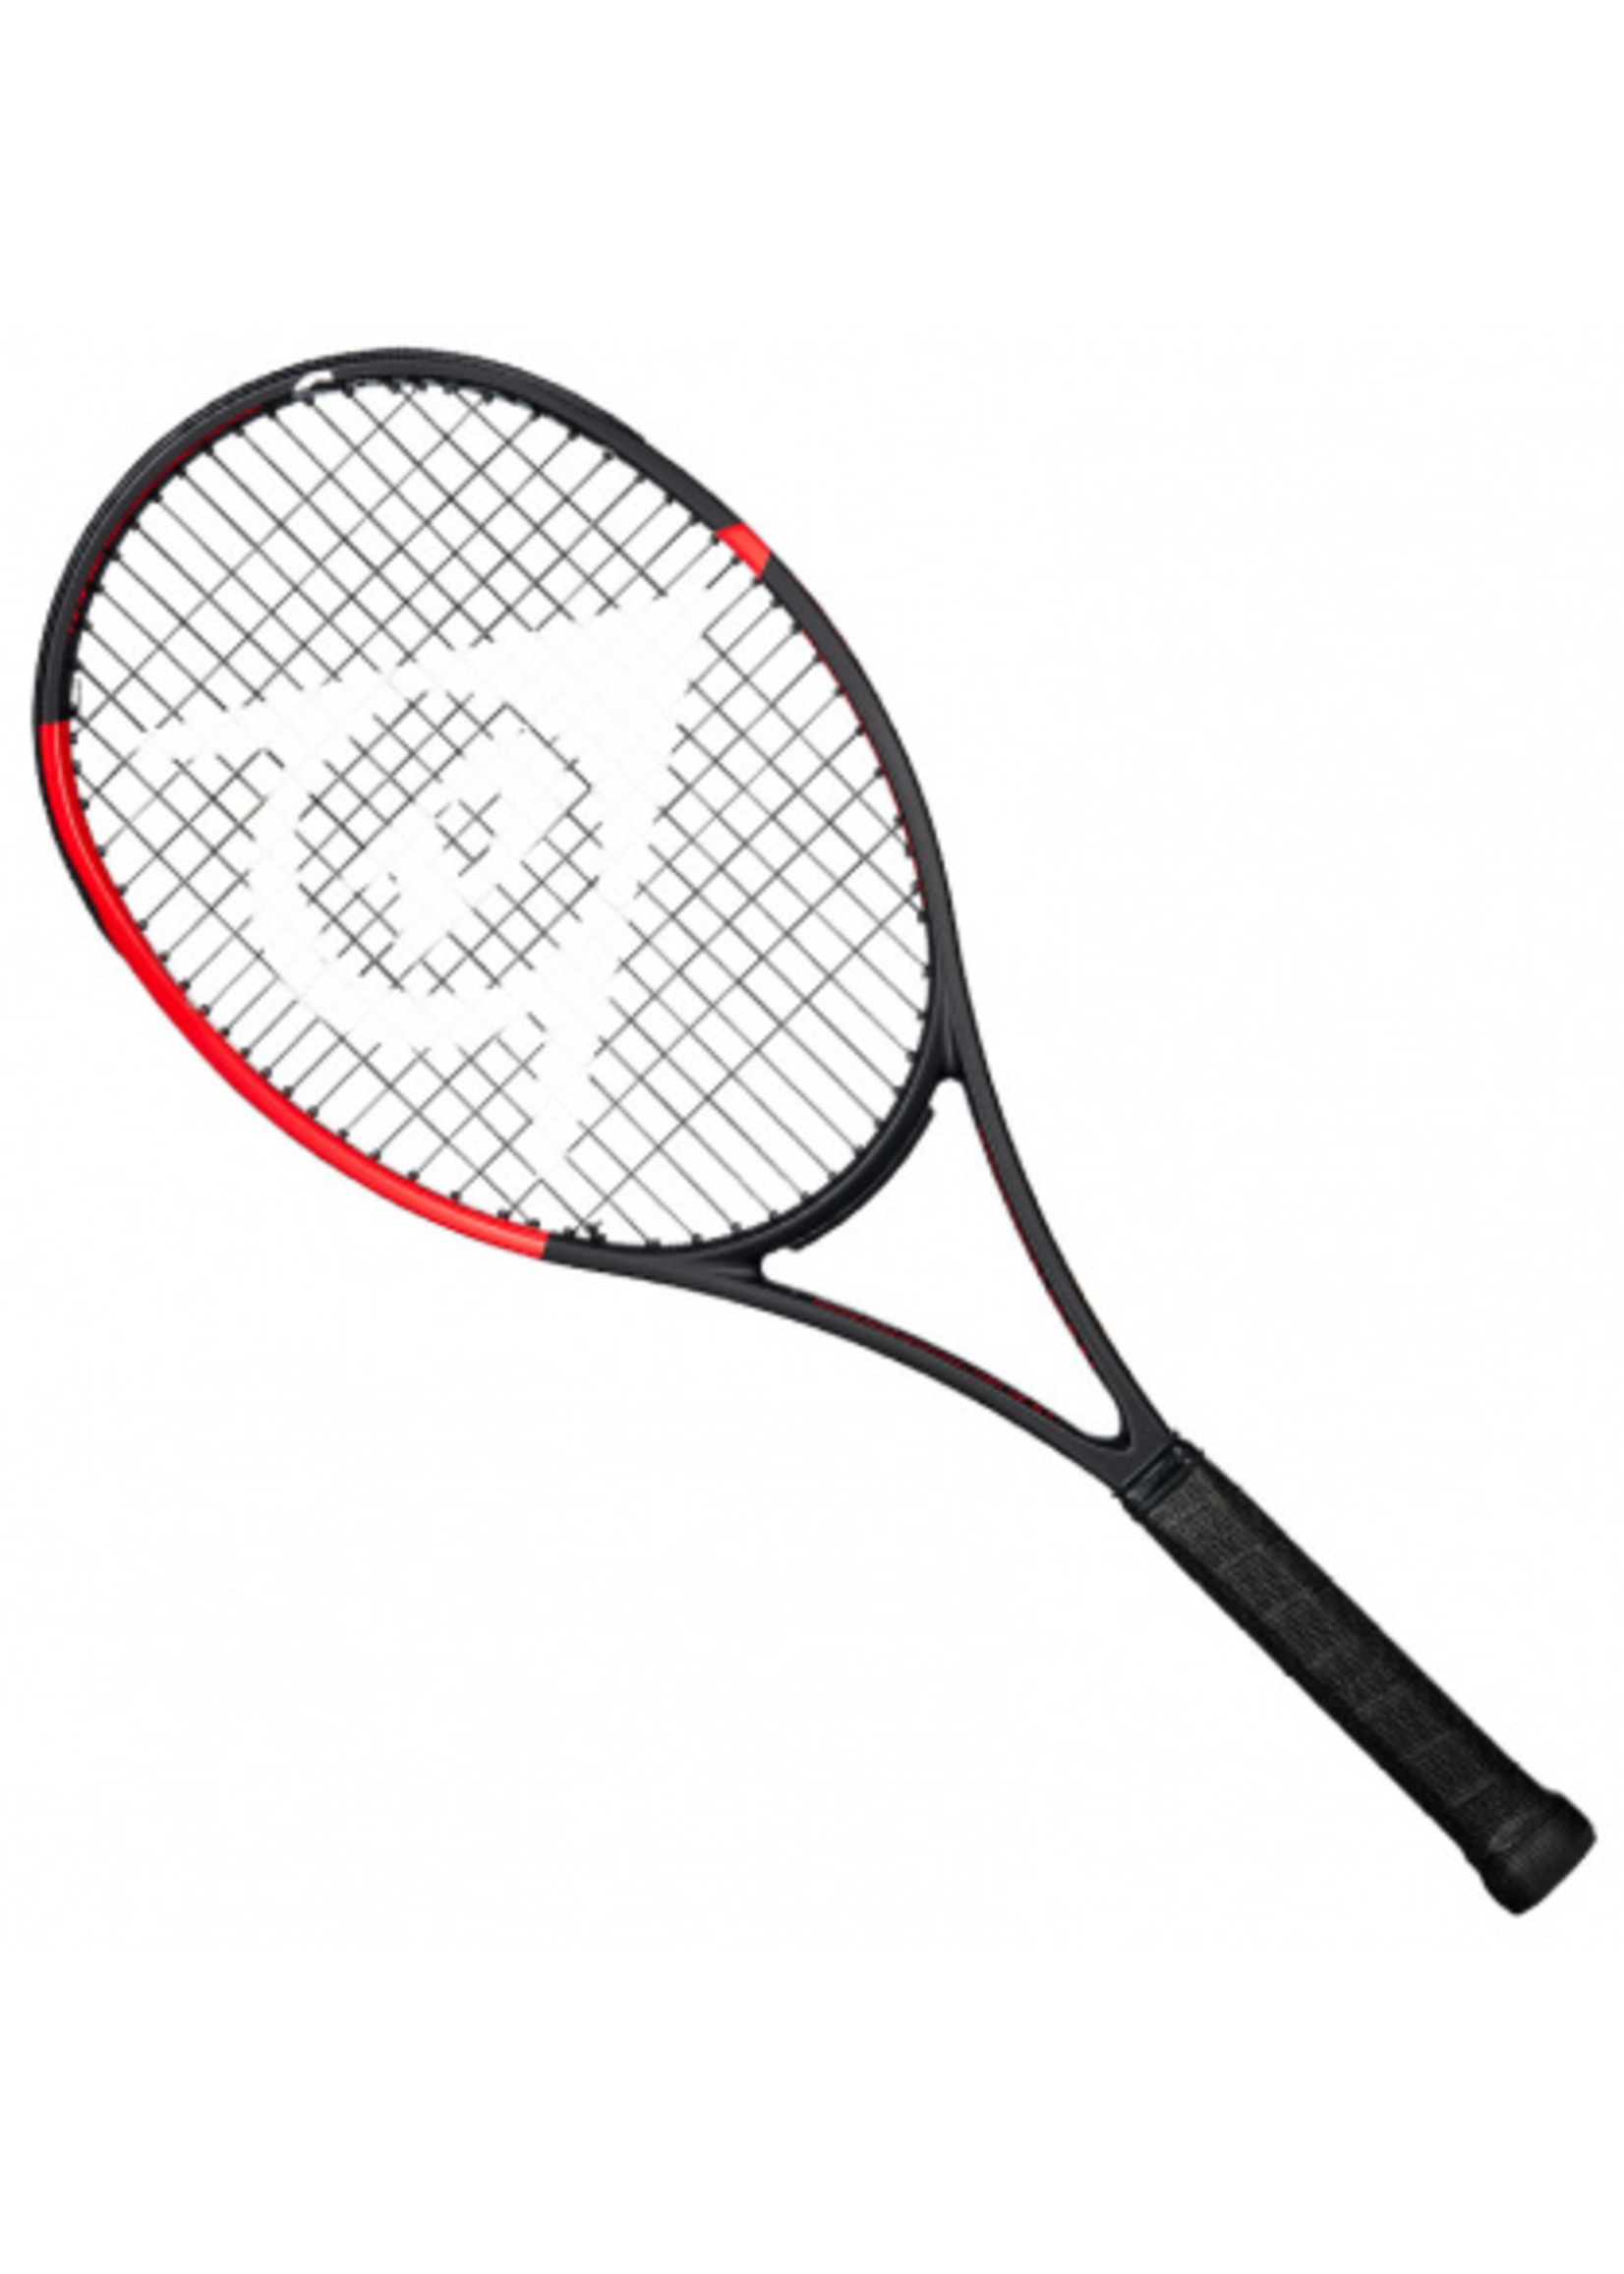 Dunlop Srixon Dunlop Srixon CX 200 LS Tennis Racket (2019)